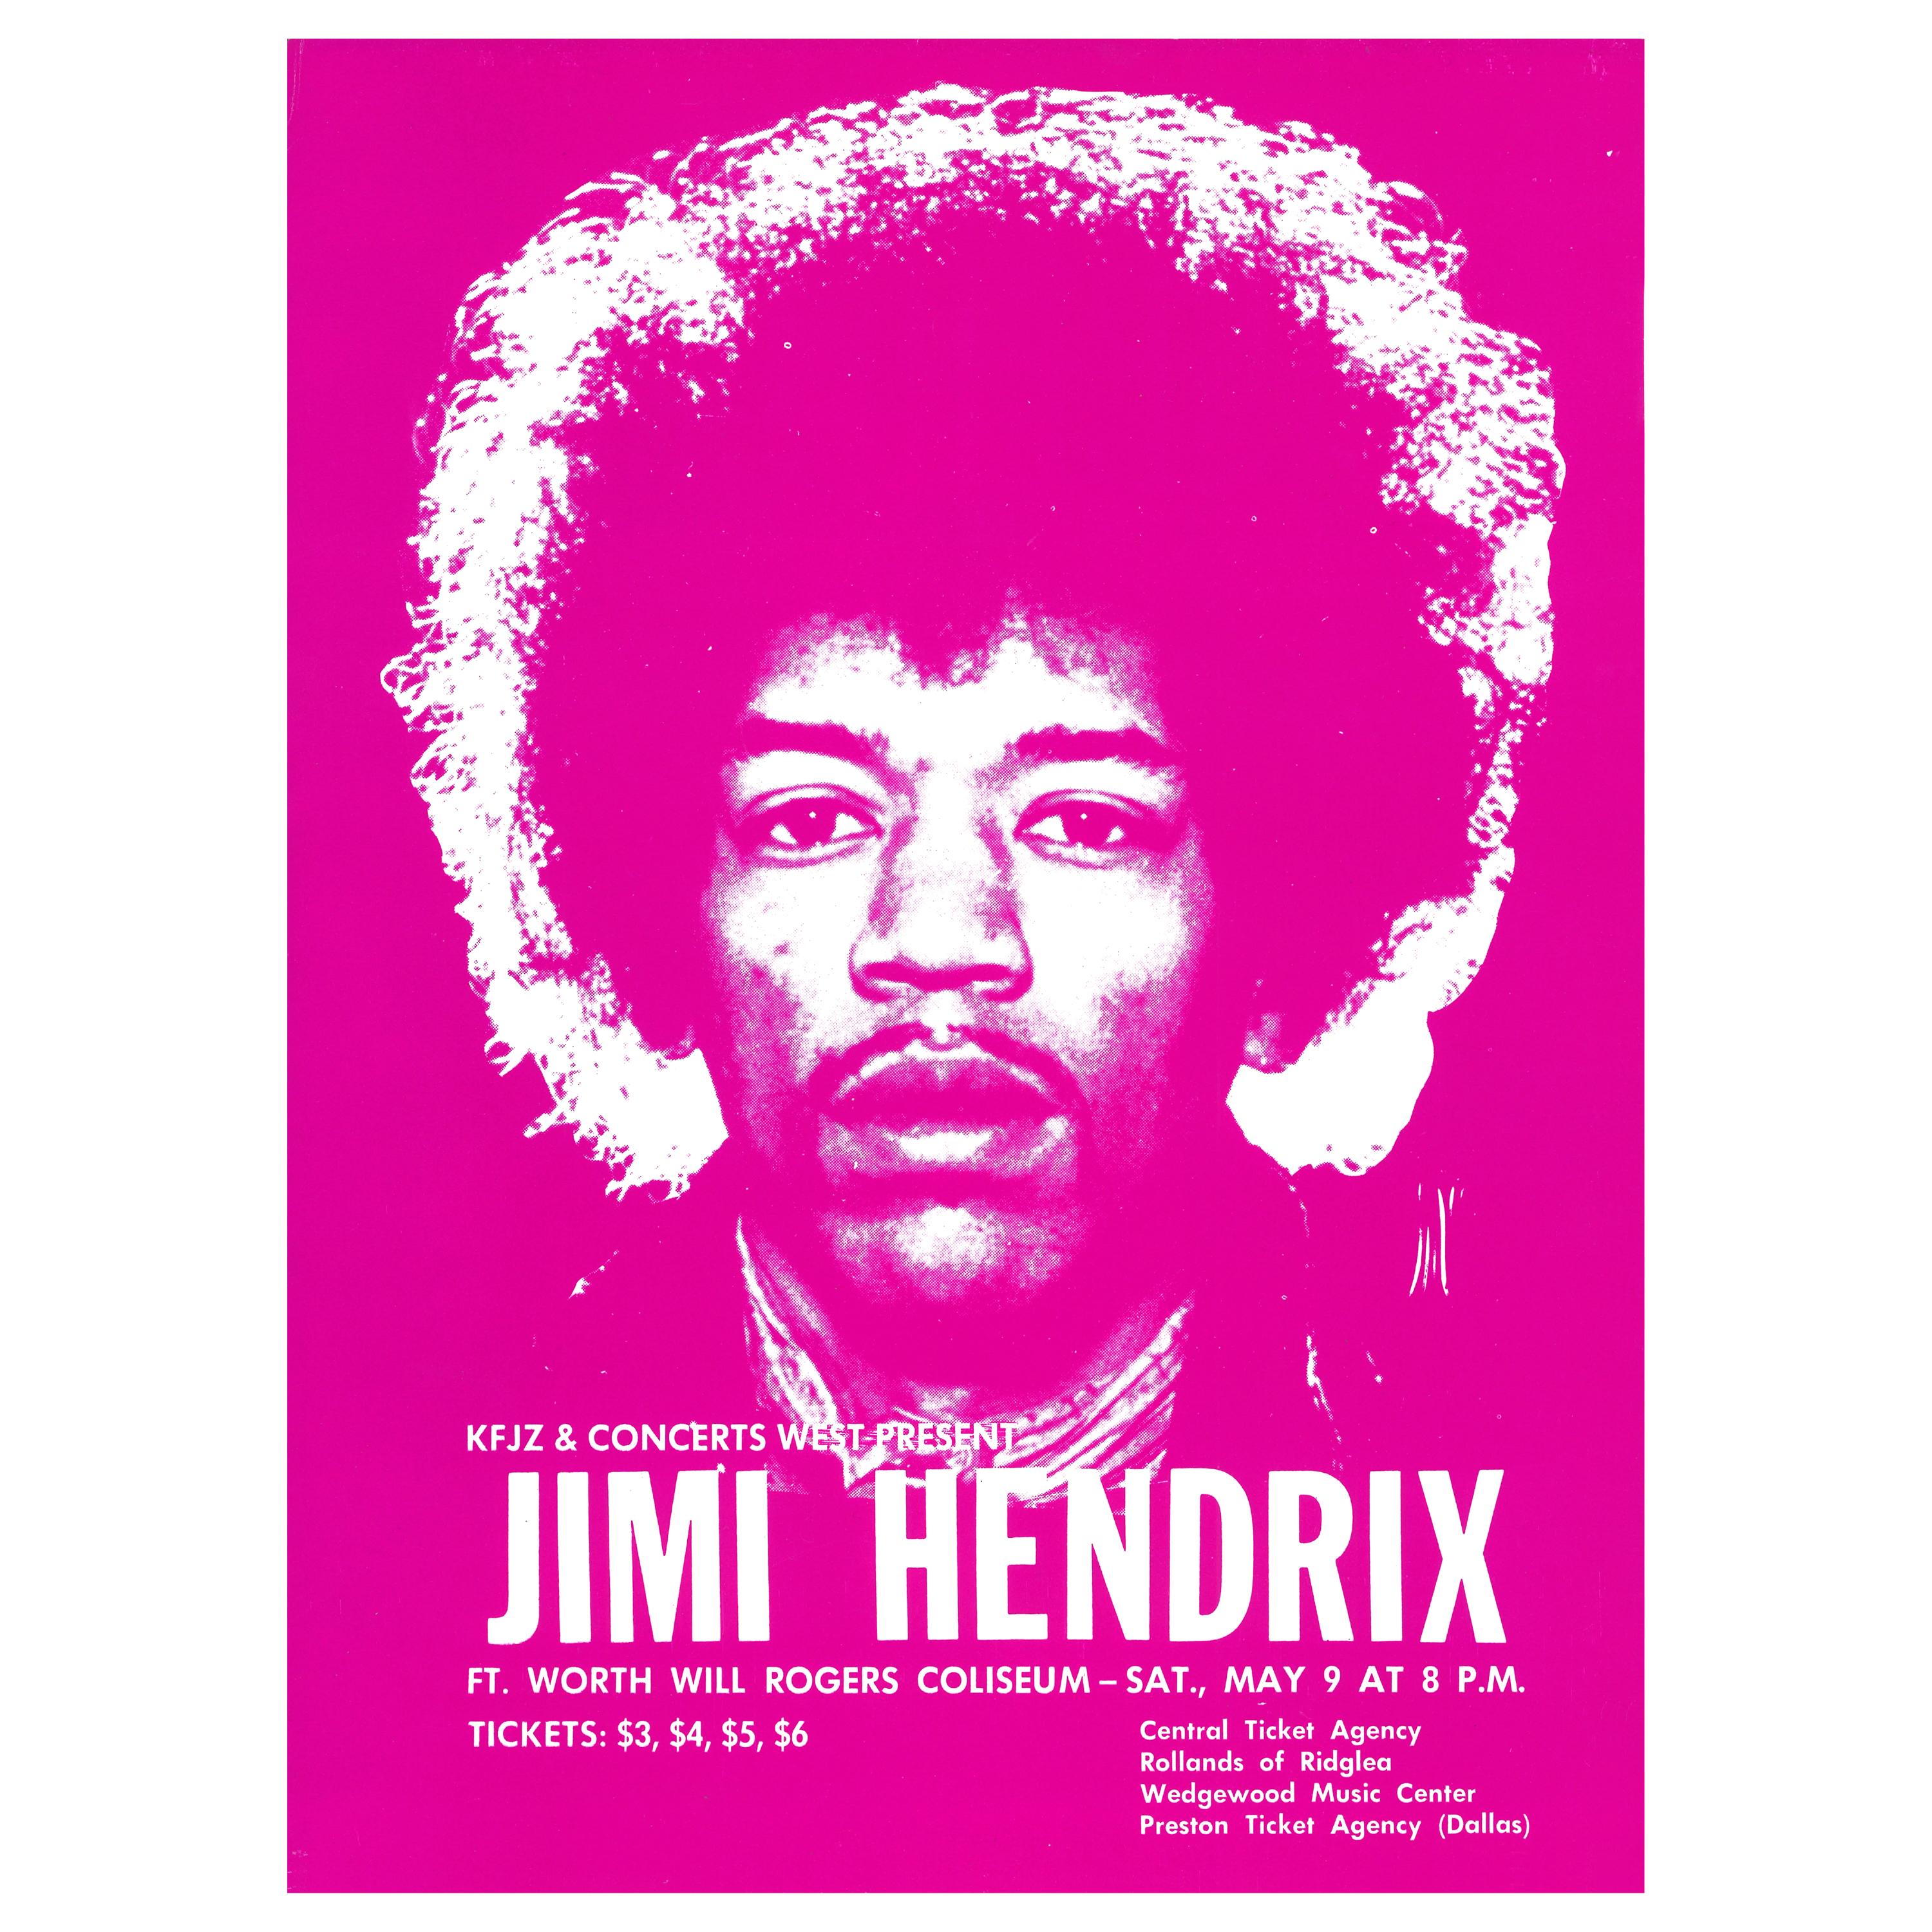 Jimi Hendrix Original Vintage Concert Handbill Poster, Ft. Worth, Texas, 1970